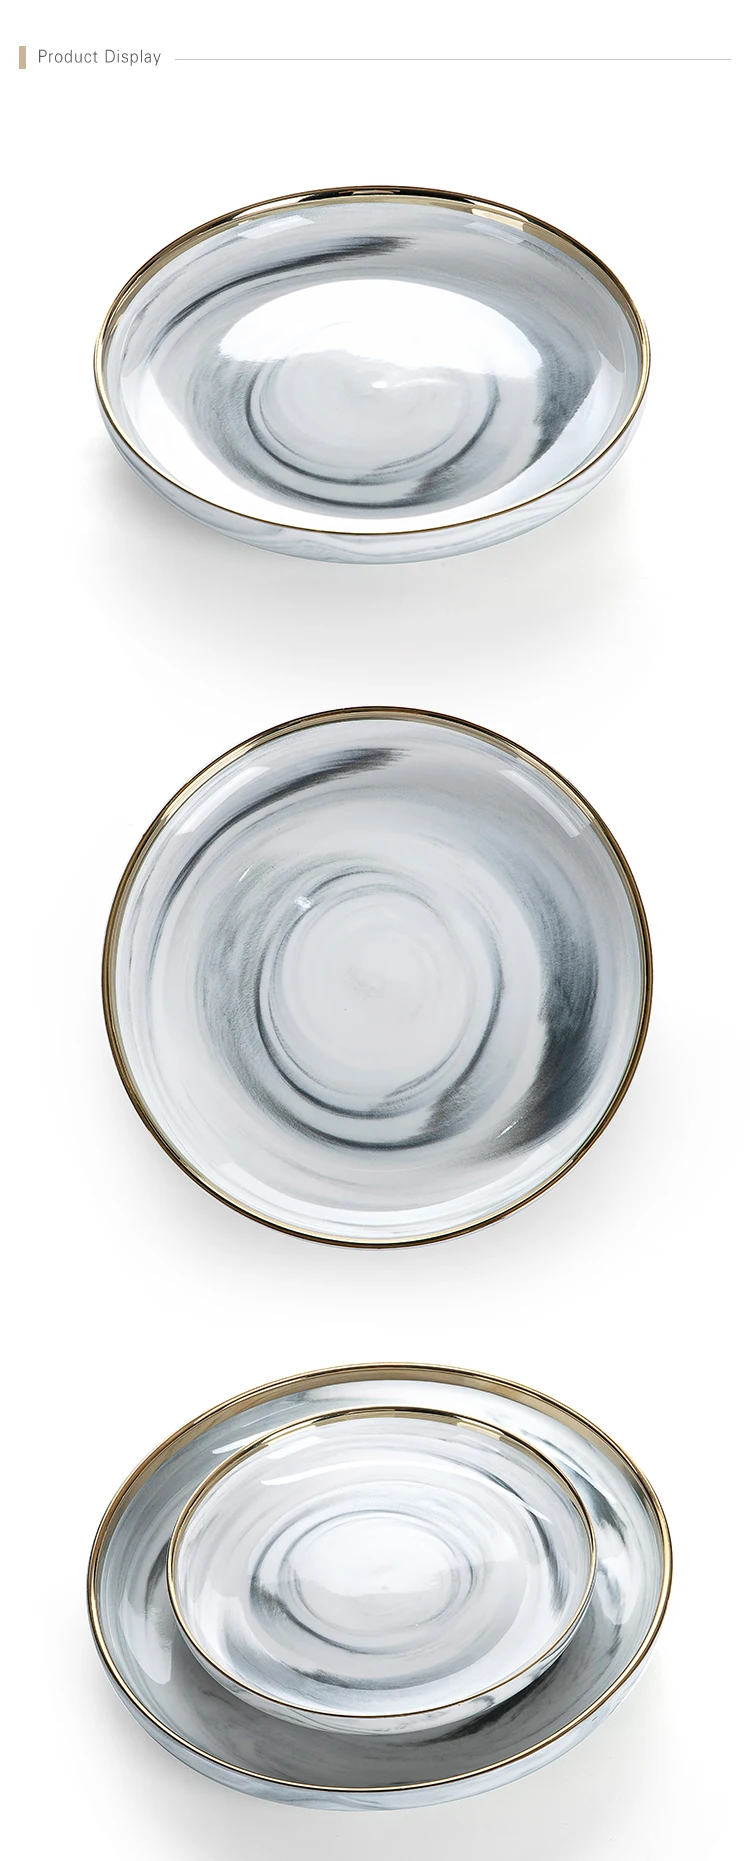 Modern Crockery Tableware Restaurant Plates, Best Selling Products Porcelain Wedding Plates Sets Dinnerware Marble Plate~